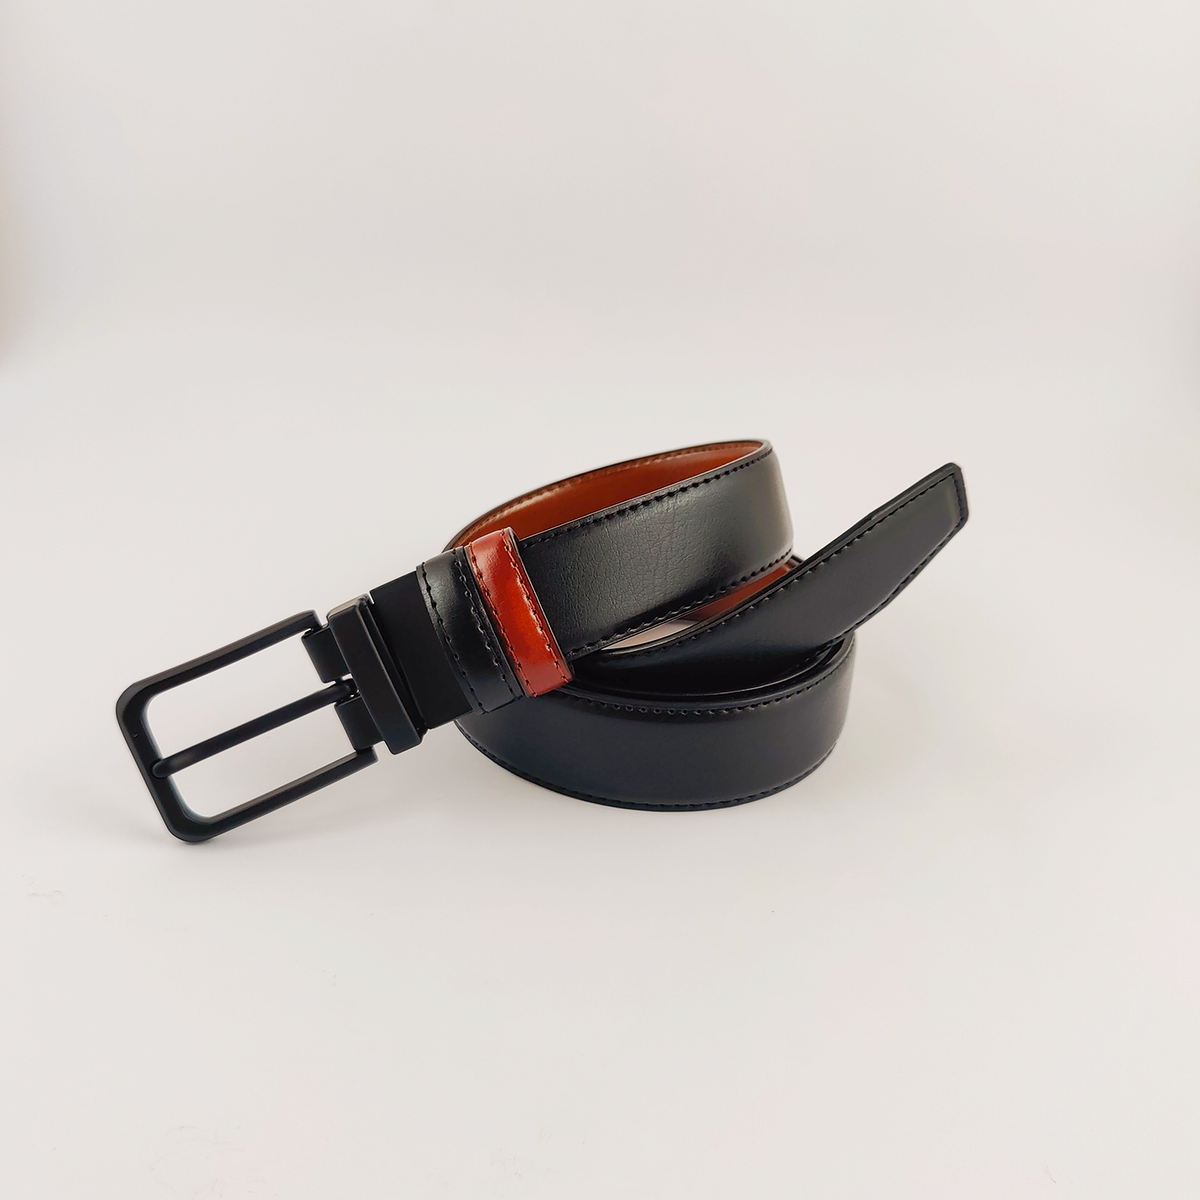 Premium black & light brown leather formal reversible belt